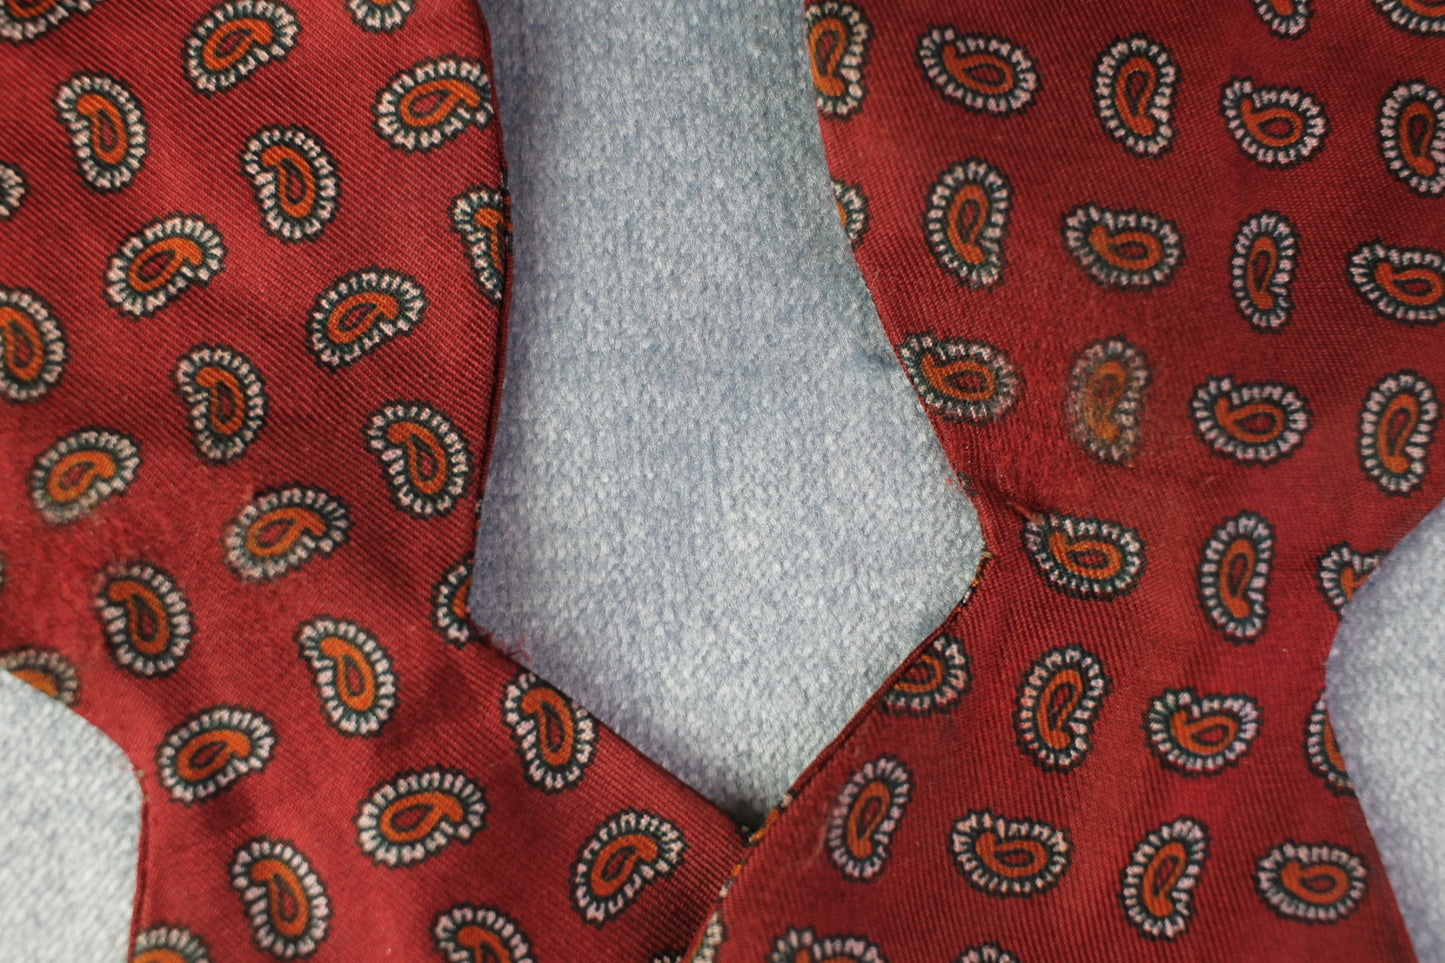 Vintage self tie thistle end all silk deep red orange white repeat motif pattern bow tie adjustable